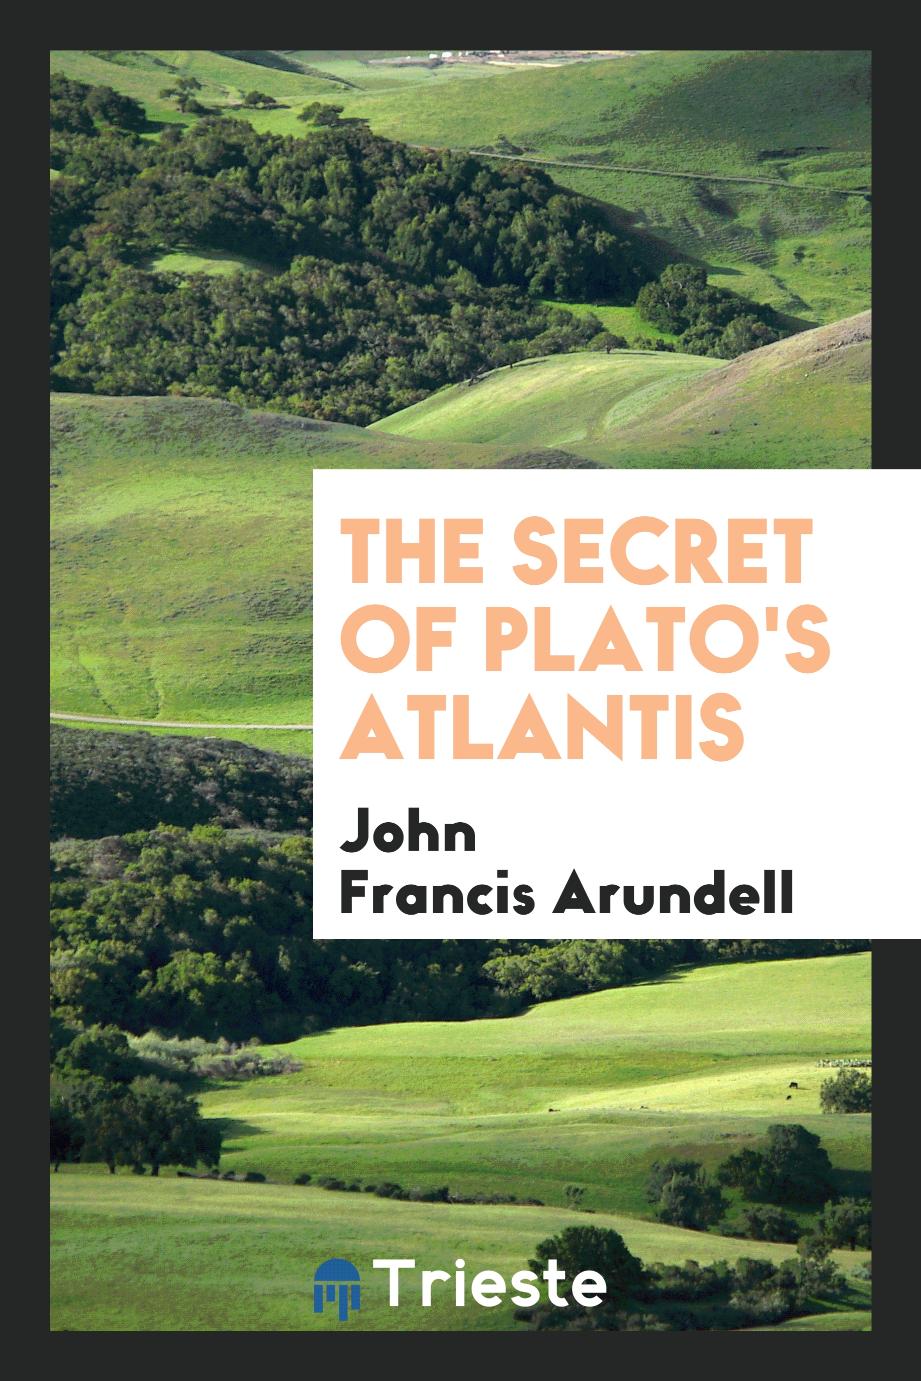 The Secret of Plato's Atlantis